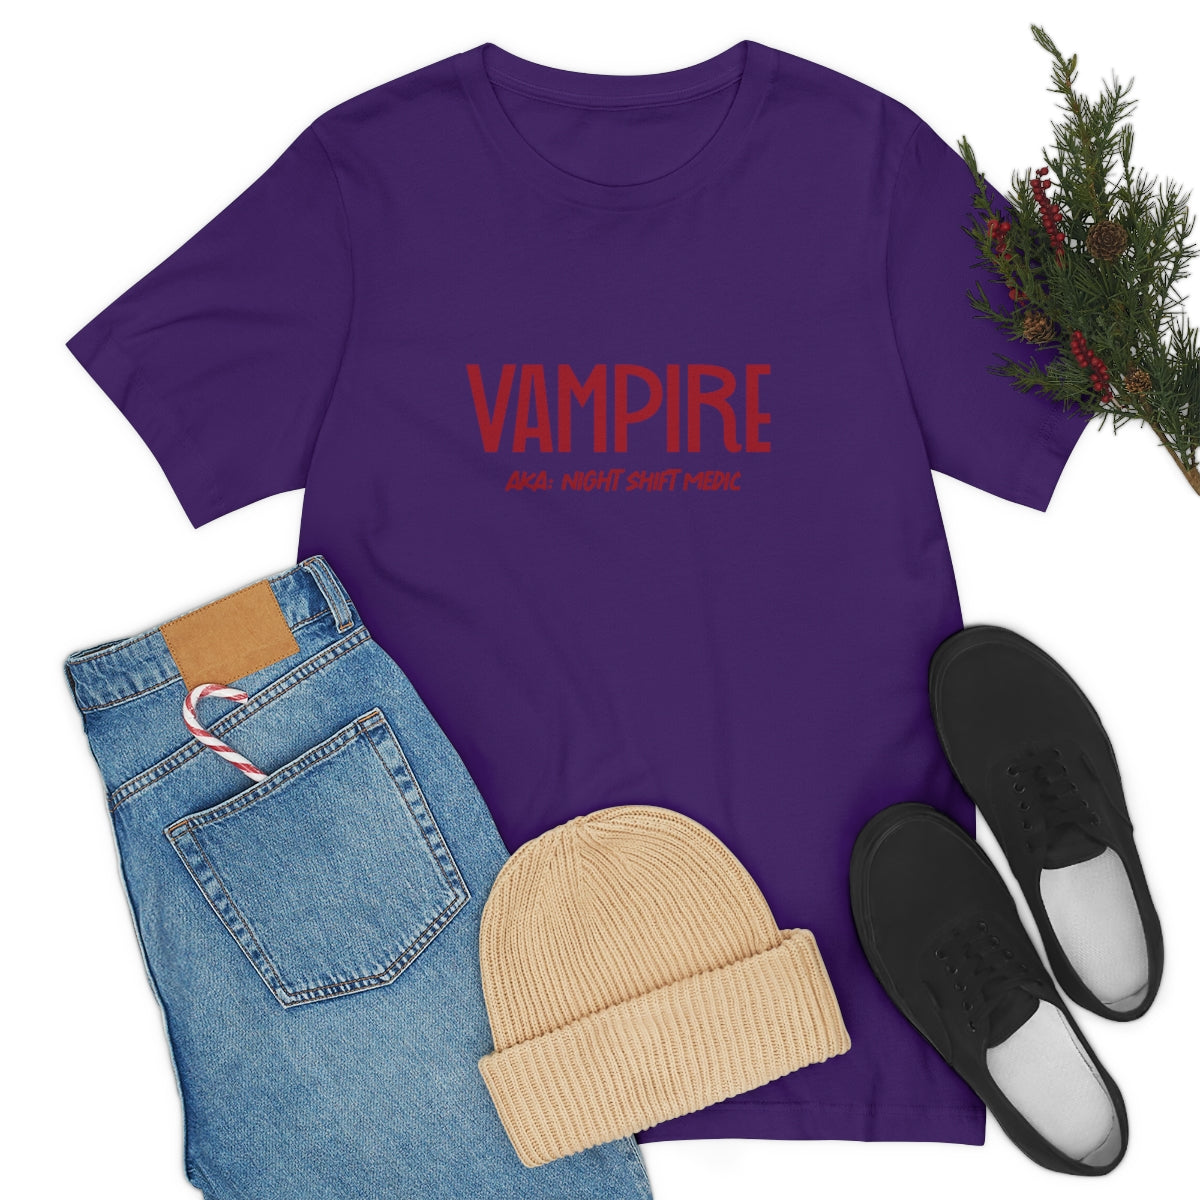 Vampire: AKA Night Shift Medic Unisex Jersey Short Sleeve Tee